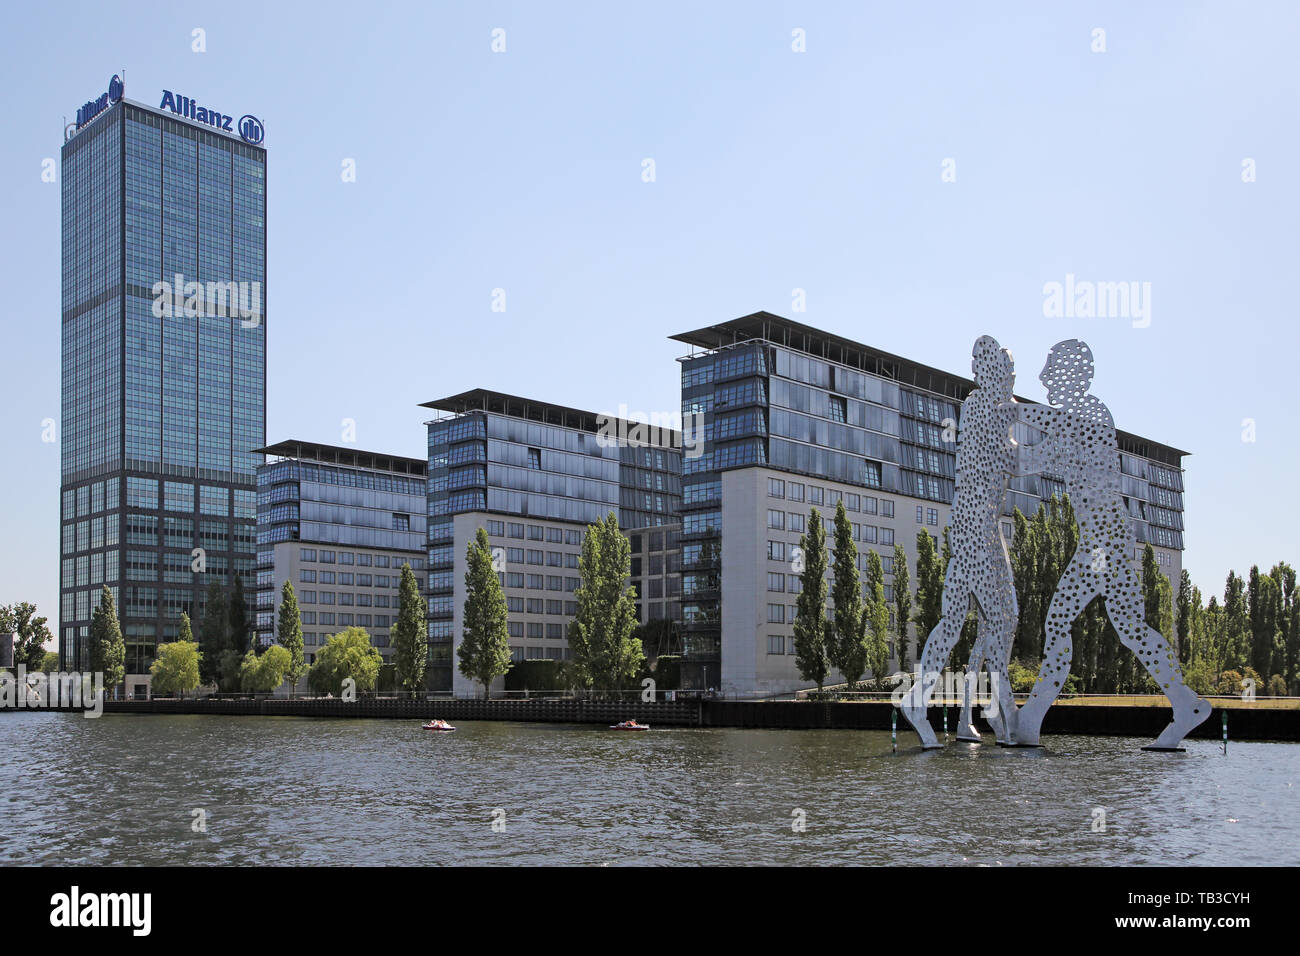 14.07.2018, Berlin, Berlin, Deutschland - Gebäude Komplex Treptowers mit der Skulptur Molecule Men. 00 S 180714 D 855 CAROEX.JPG [MODEL RELEASE: NICHT APPLICA Stockfoto